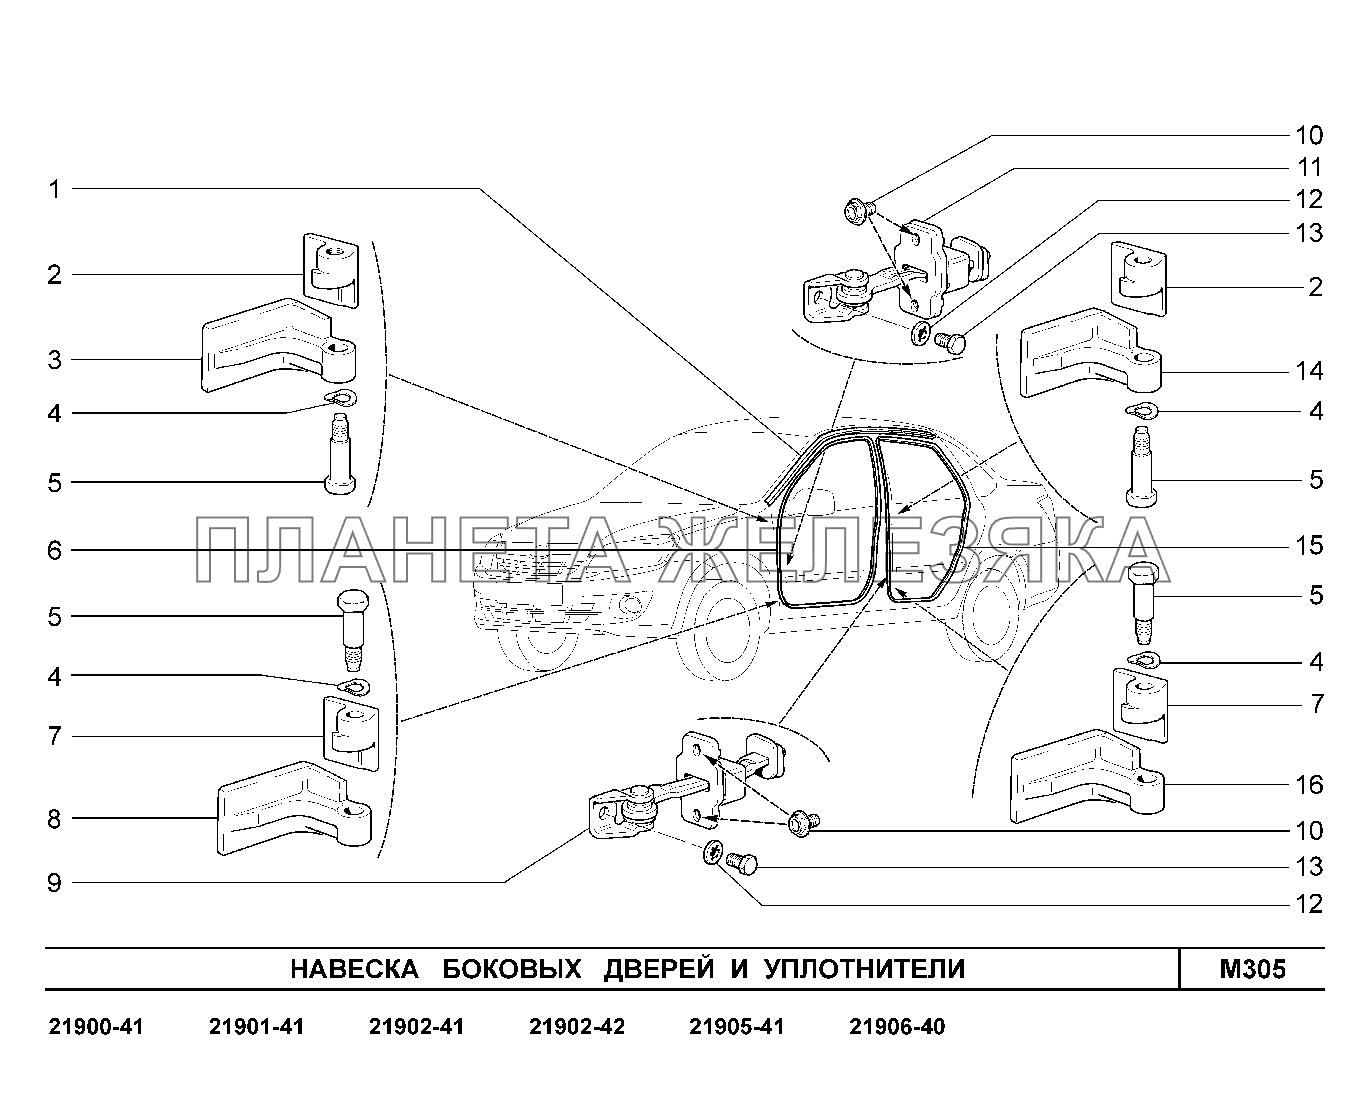 M305. Навеска боковых дверей и уплотнители Lada Granta-2190